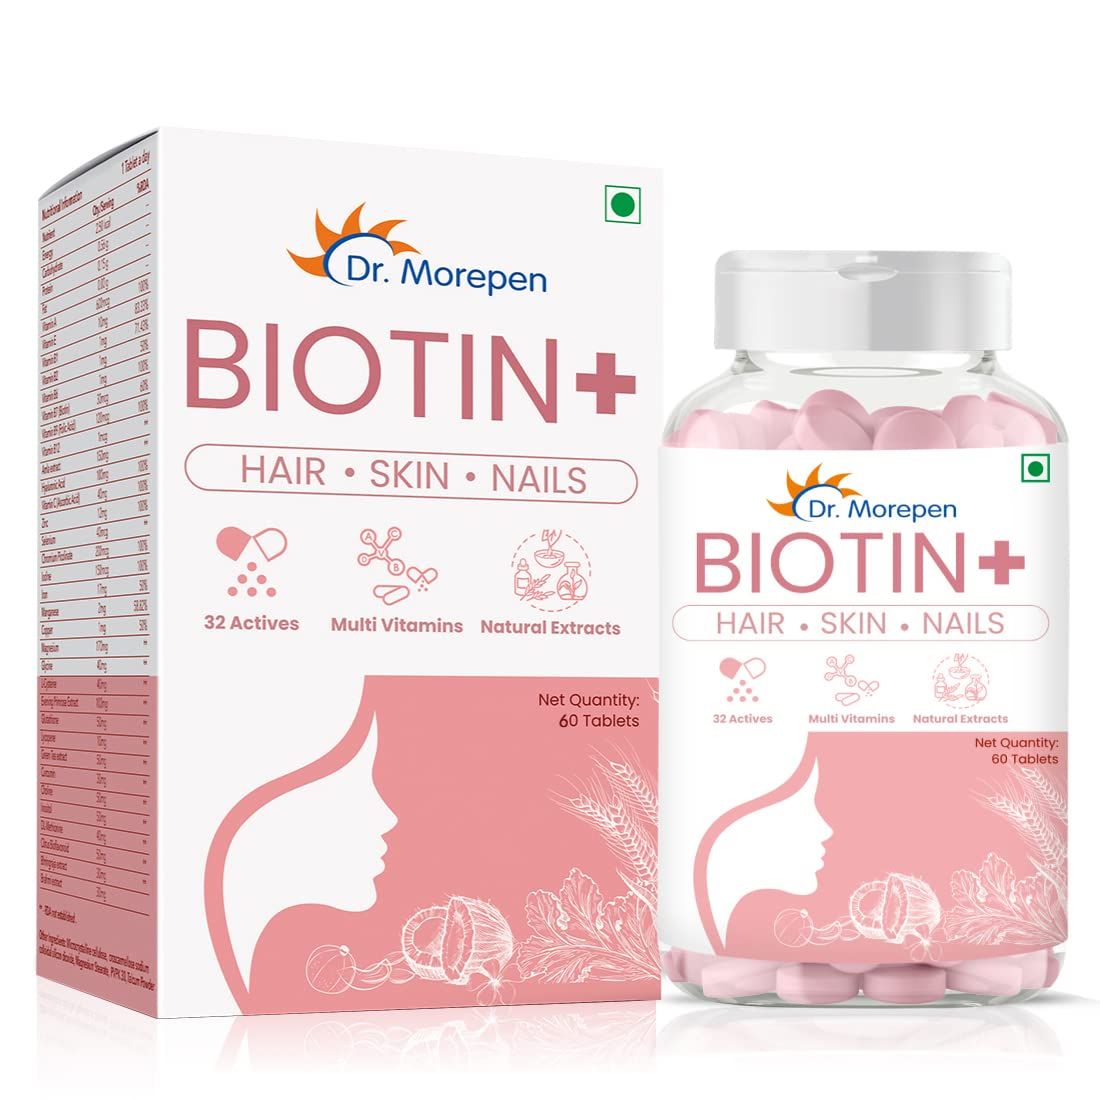 Dr Morepen Biotin+ Image